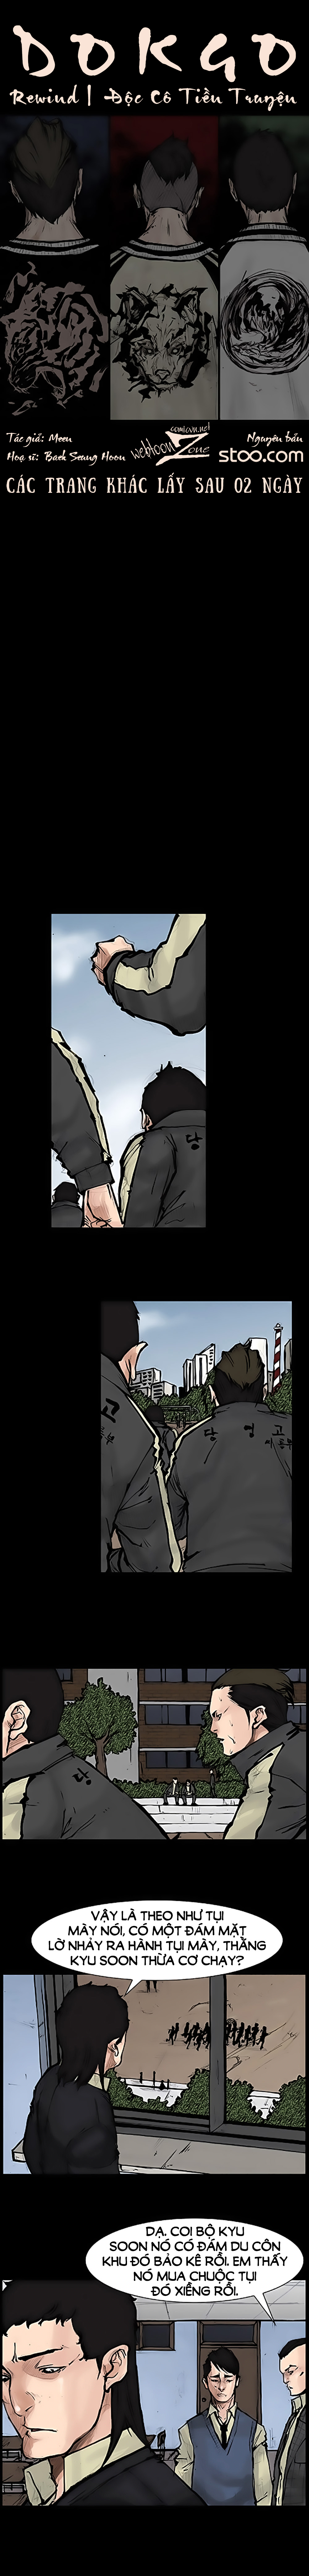 Dokgo Rewind kỳ 9 trang 1